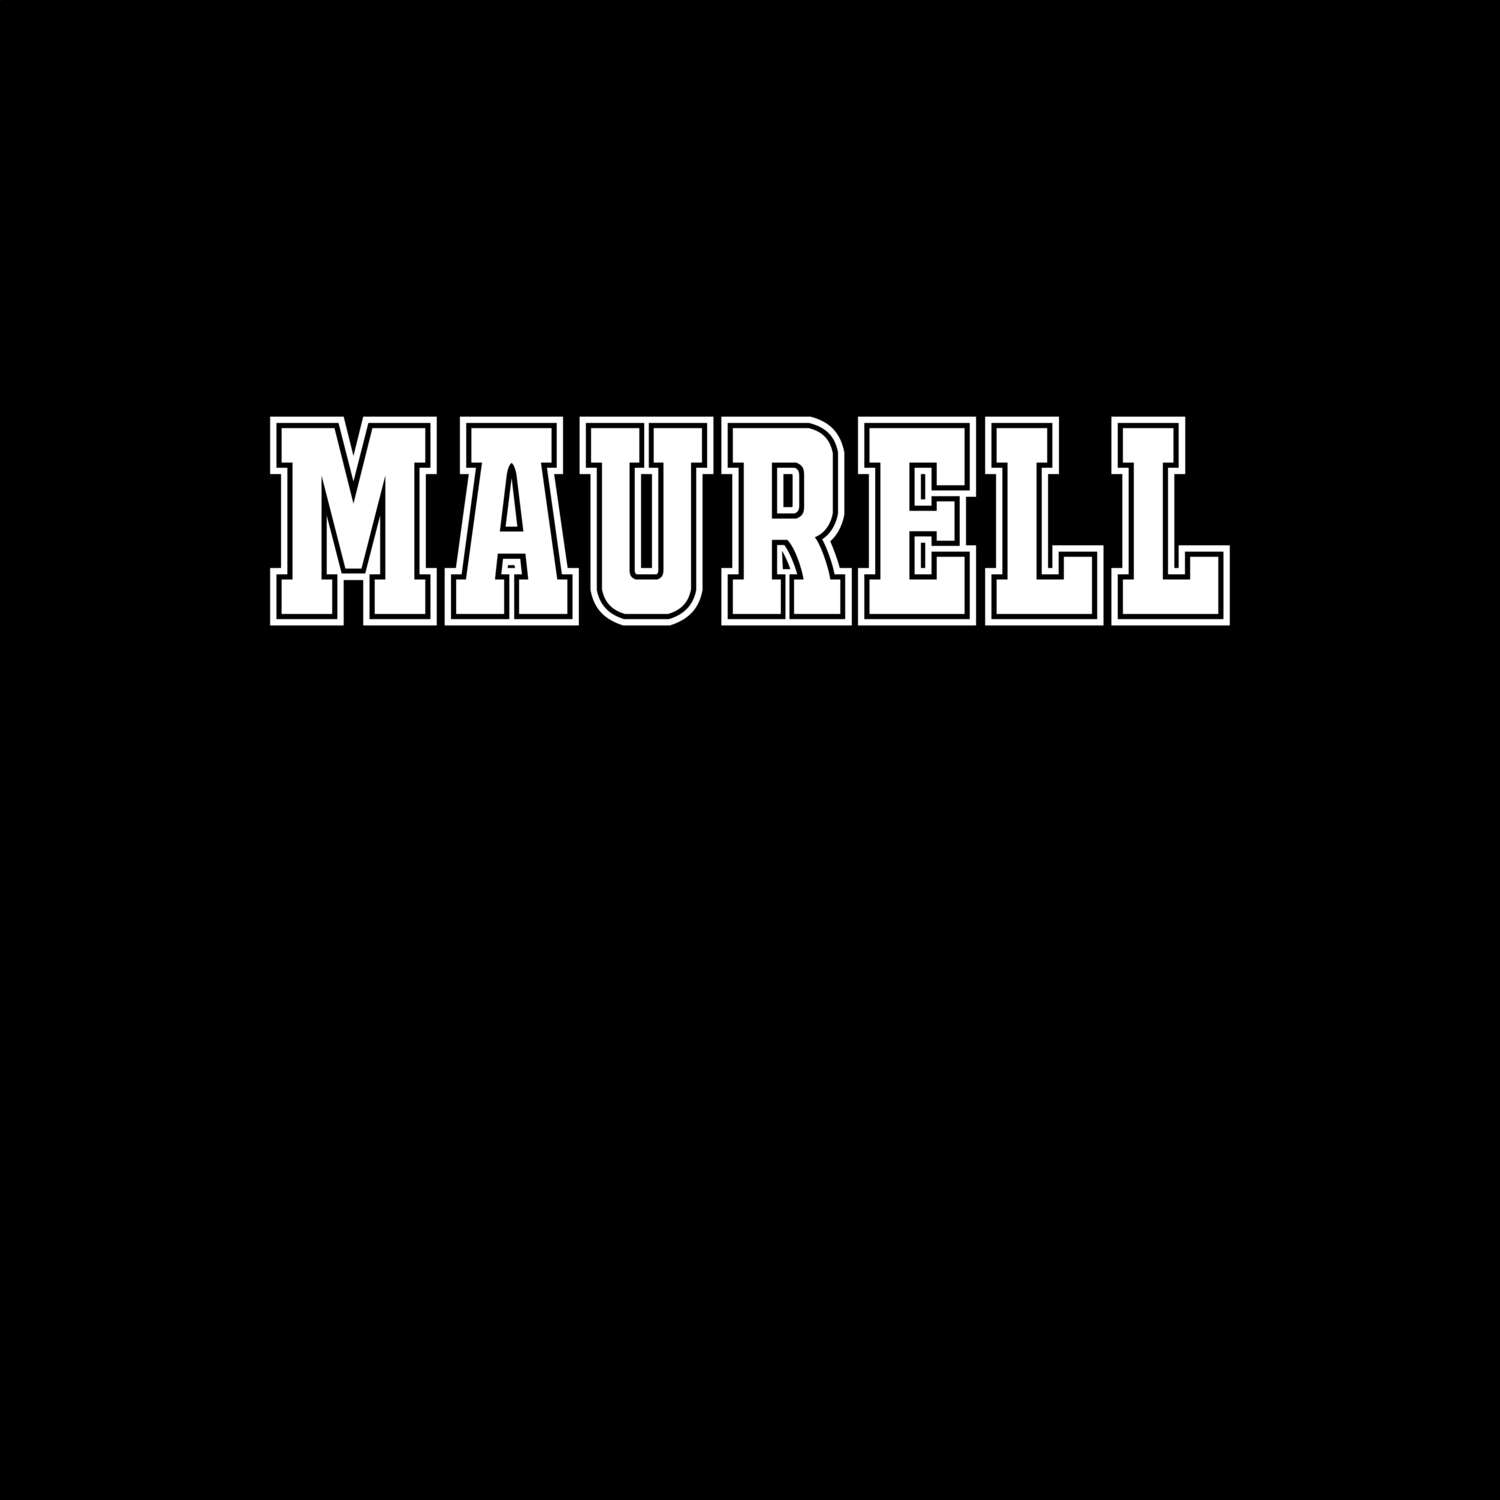 Maurell T-Shirt »Classic«